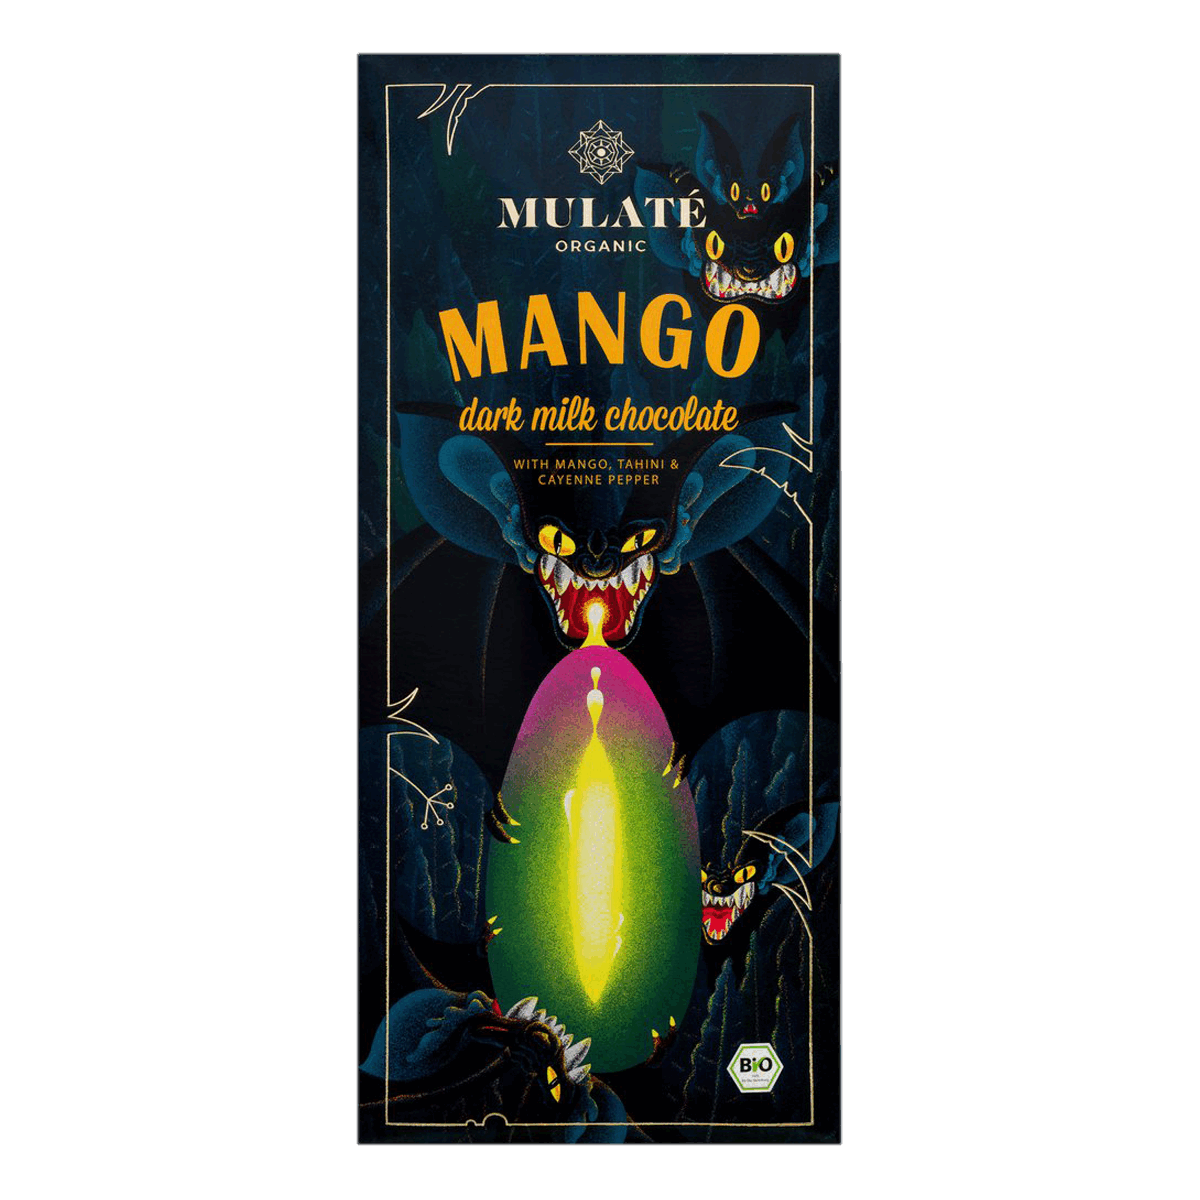 Mulate Mango Chocolate